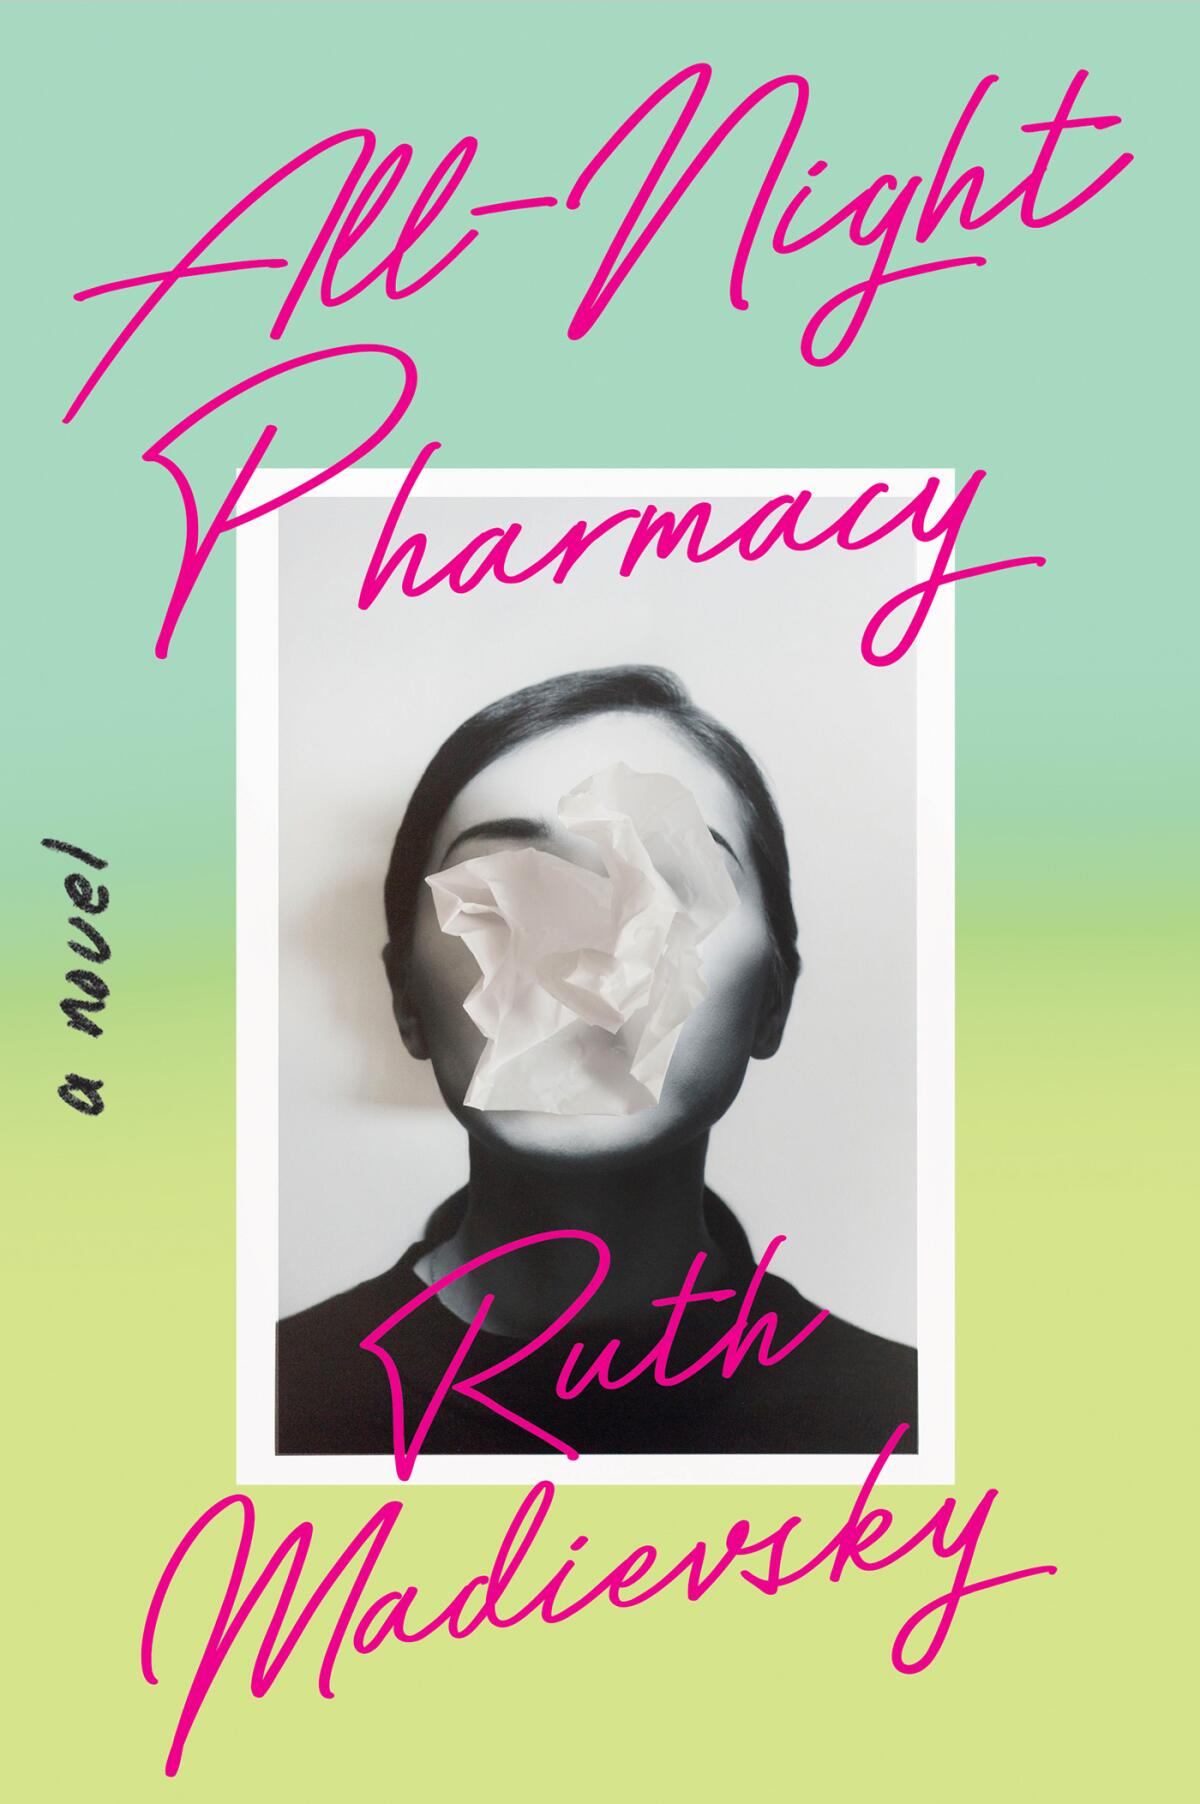 "All-Night Pharmacy," by Ruth Madievsky